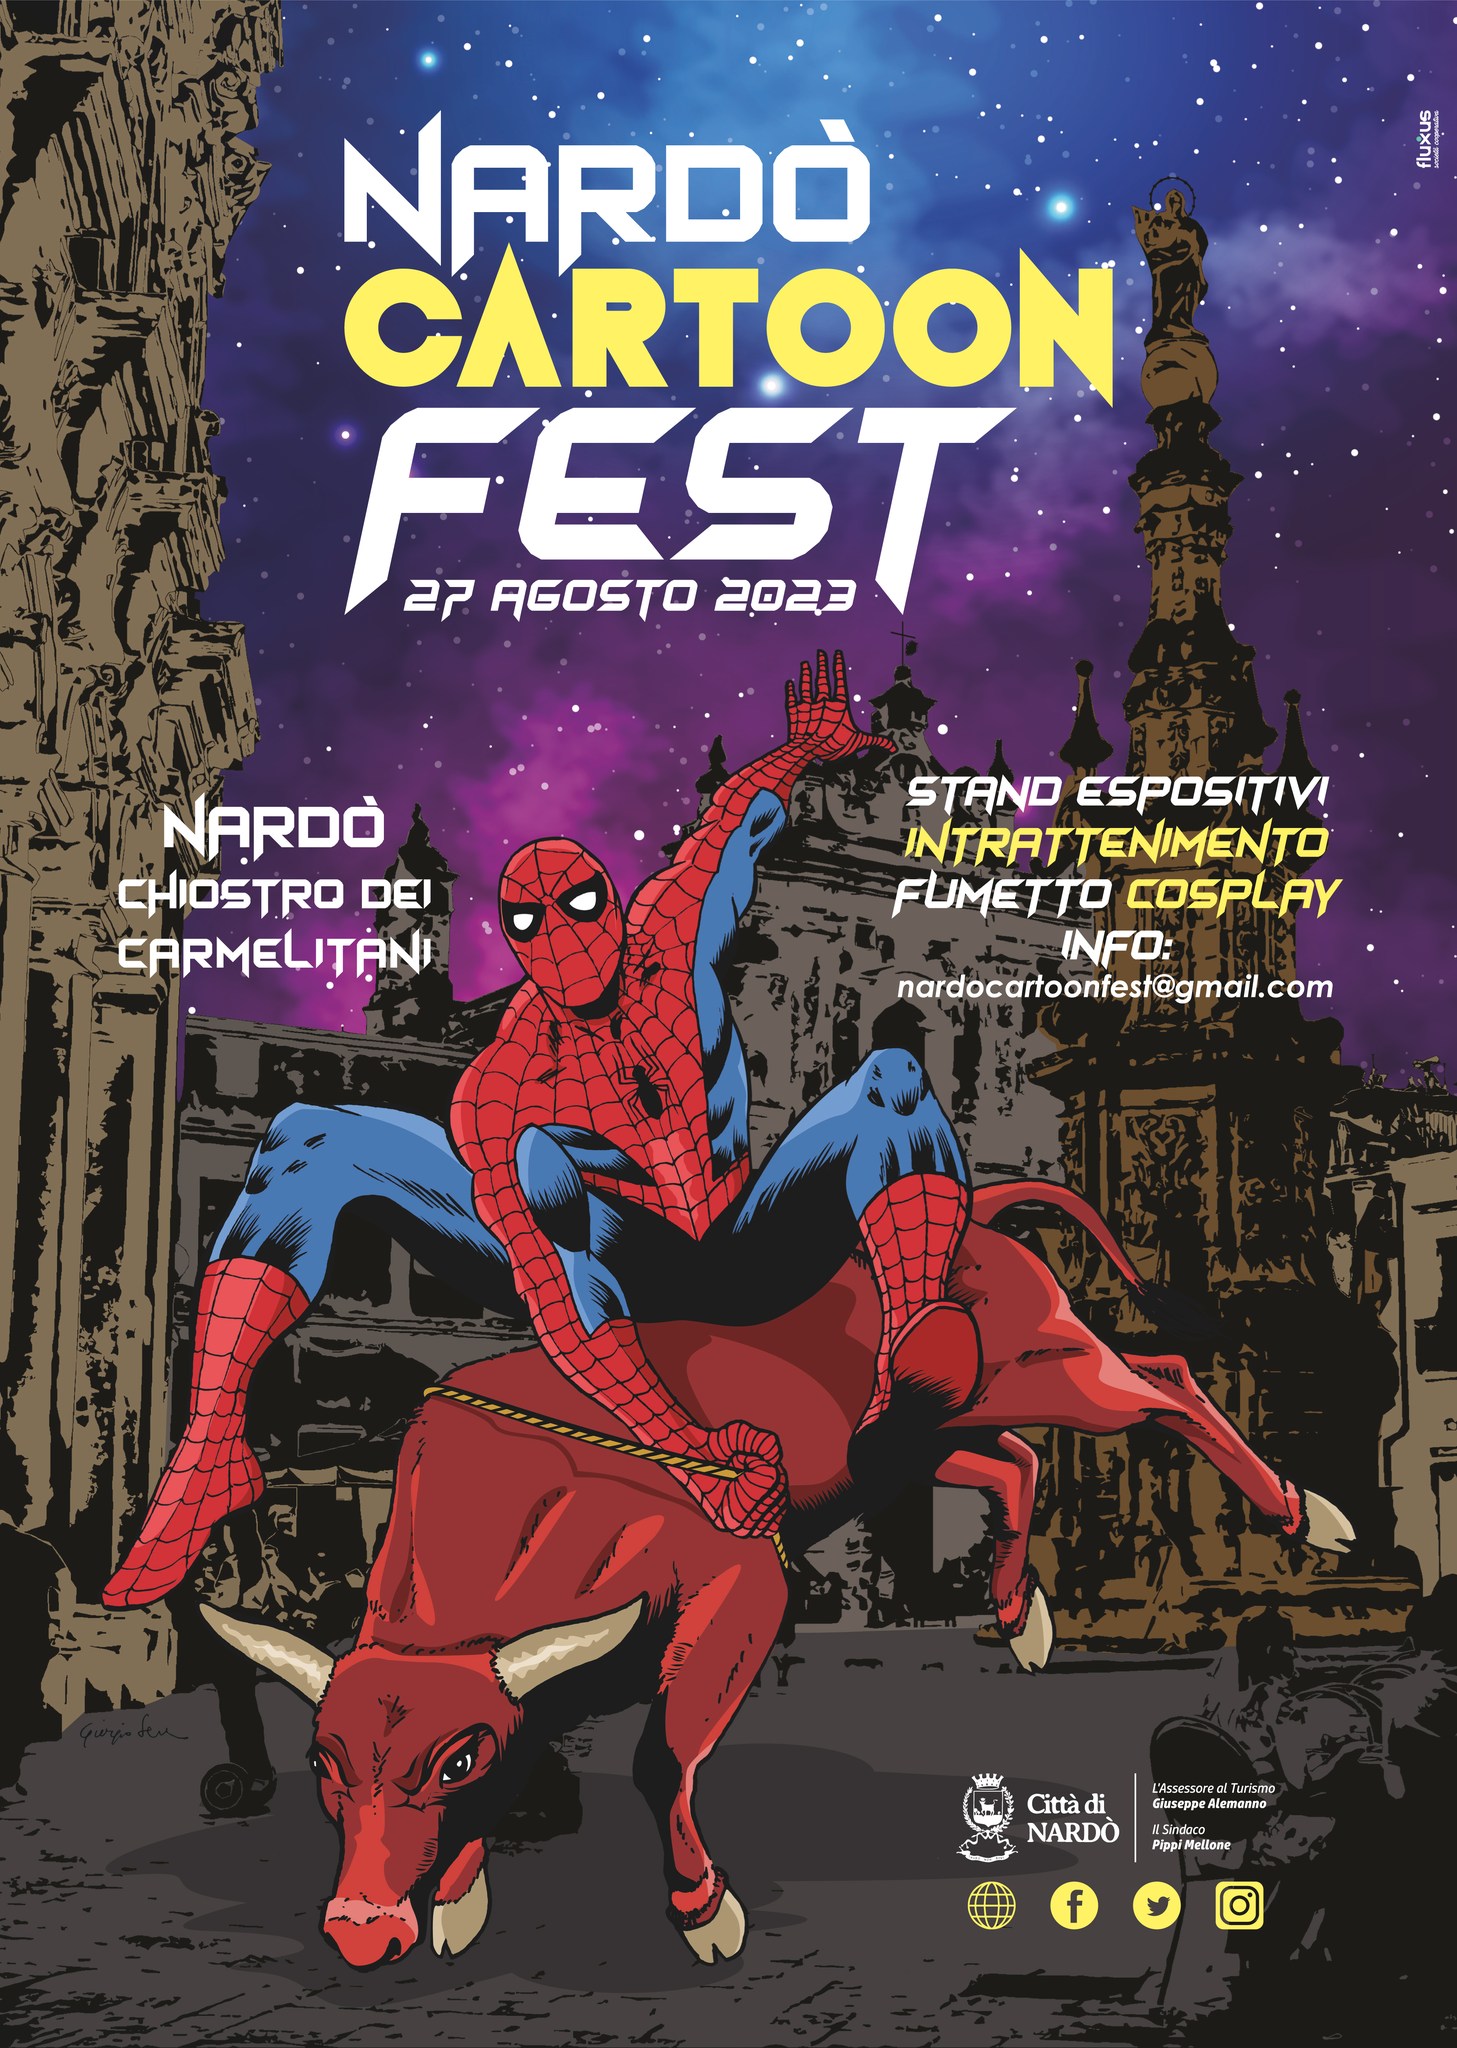 Nardò Cartoon Fest: 27 agosto 2023